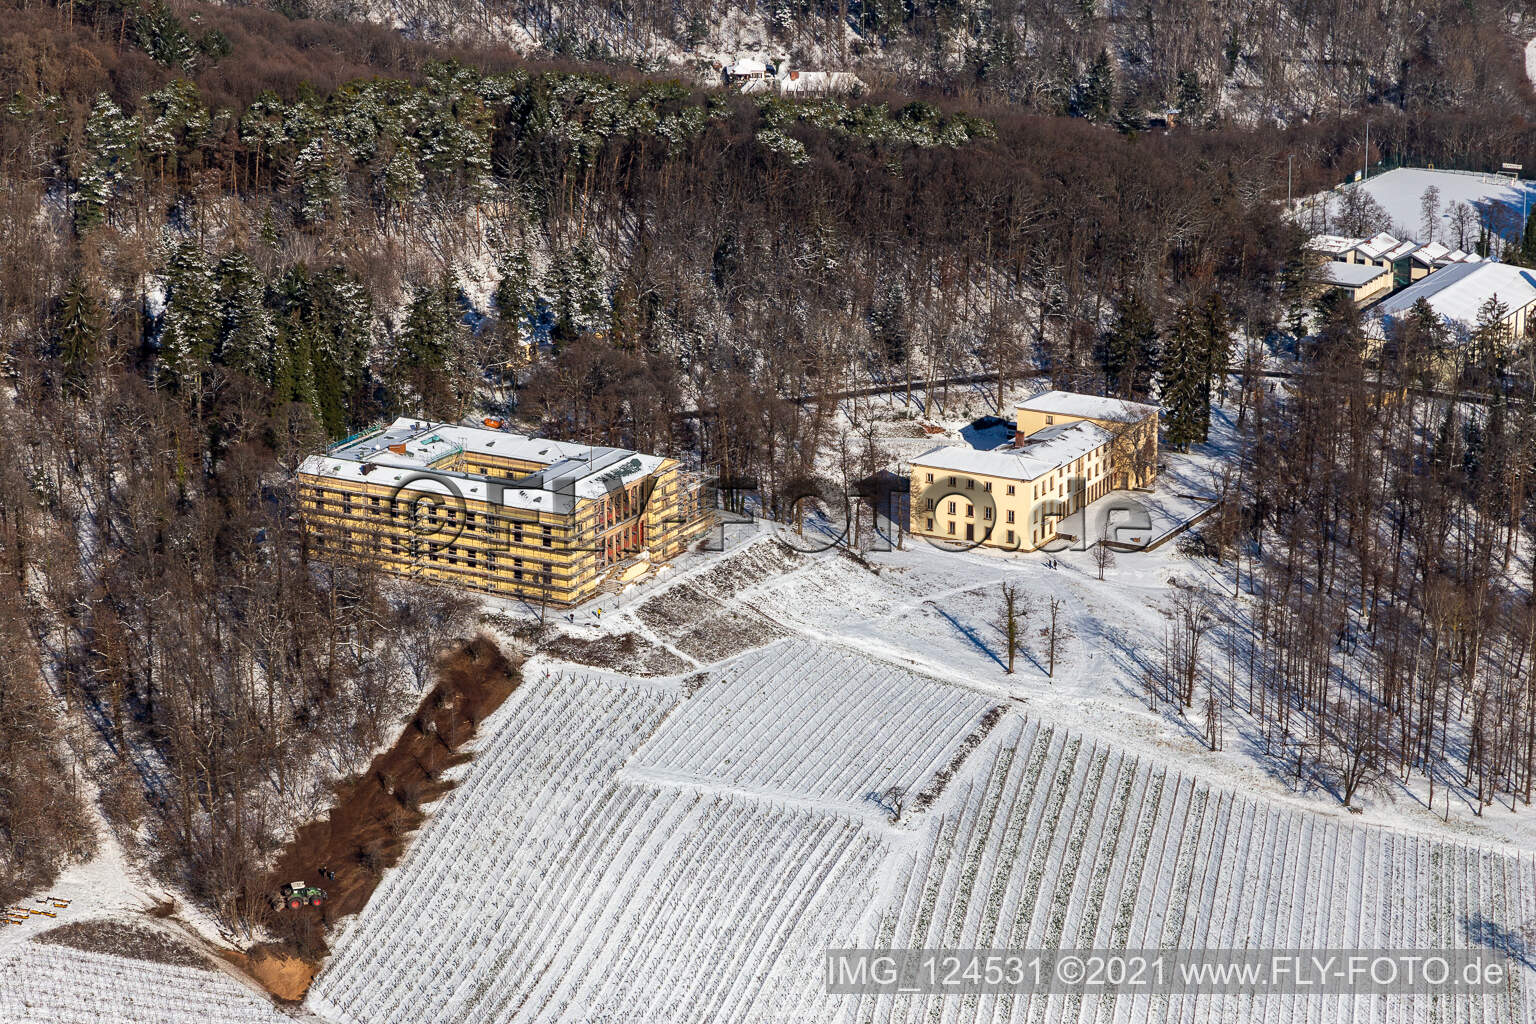 Wintry snowy palace Villa Ludwigshoehe in Edenkoben in the state Rhineland-Palatinate, Germany